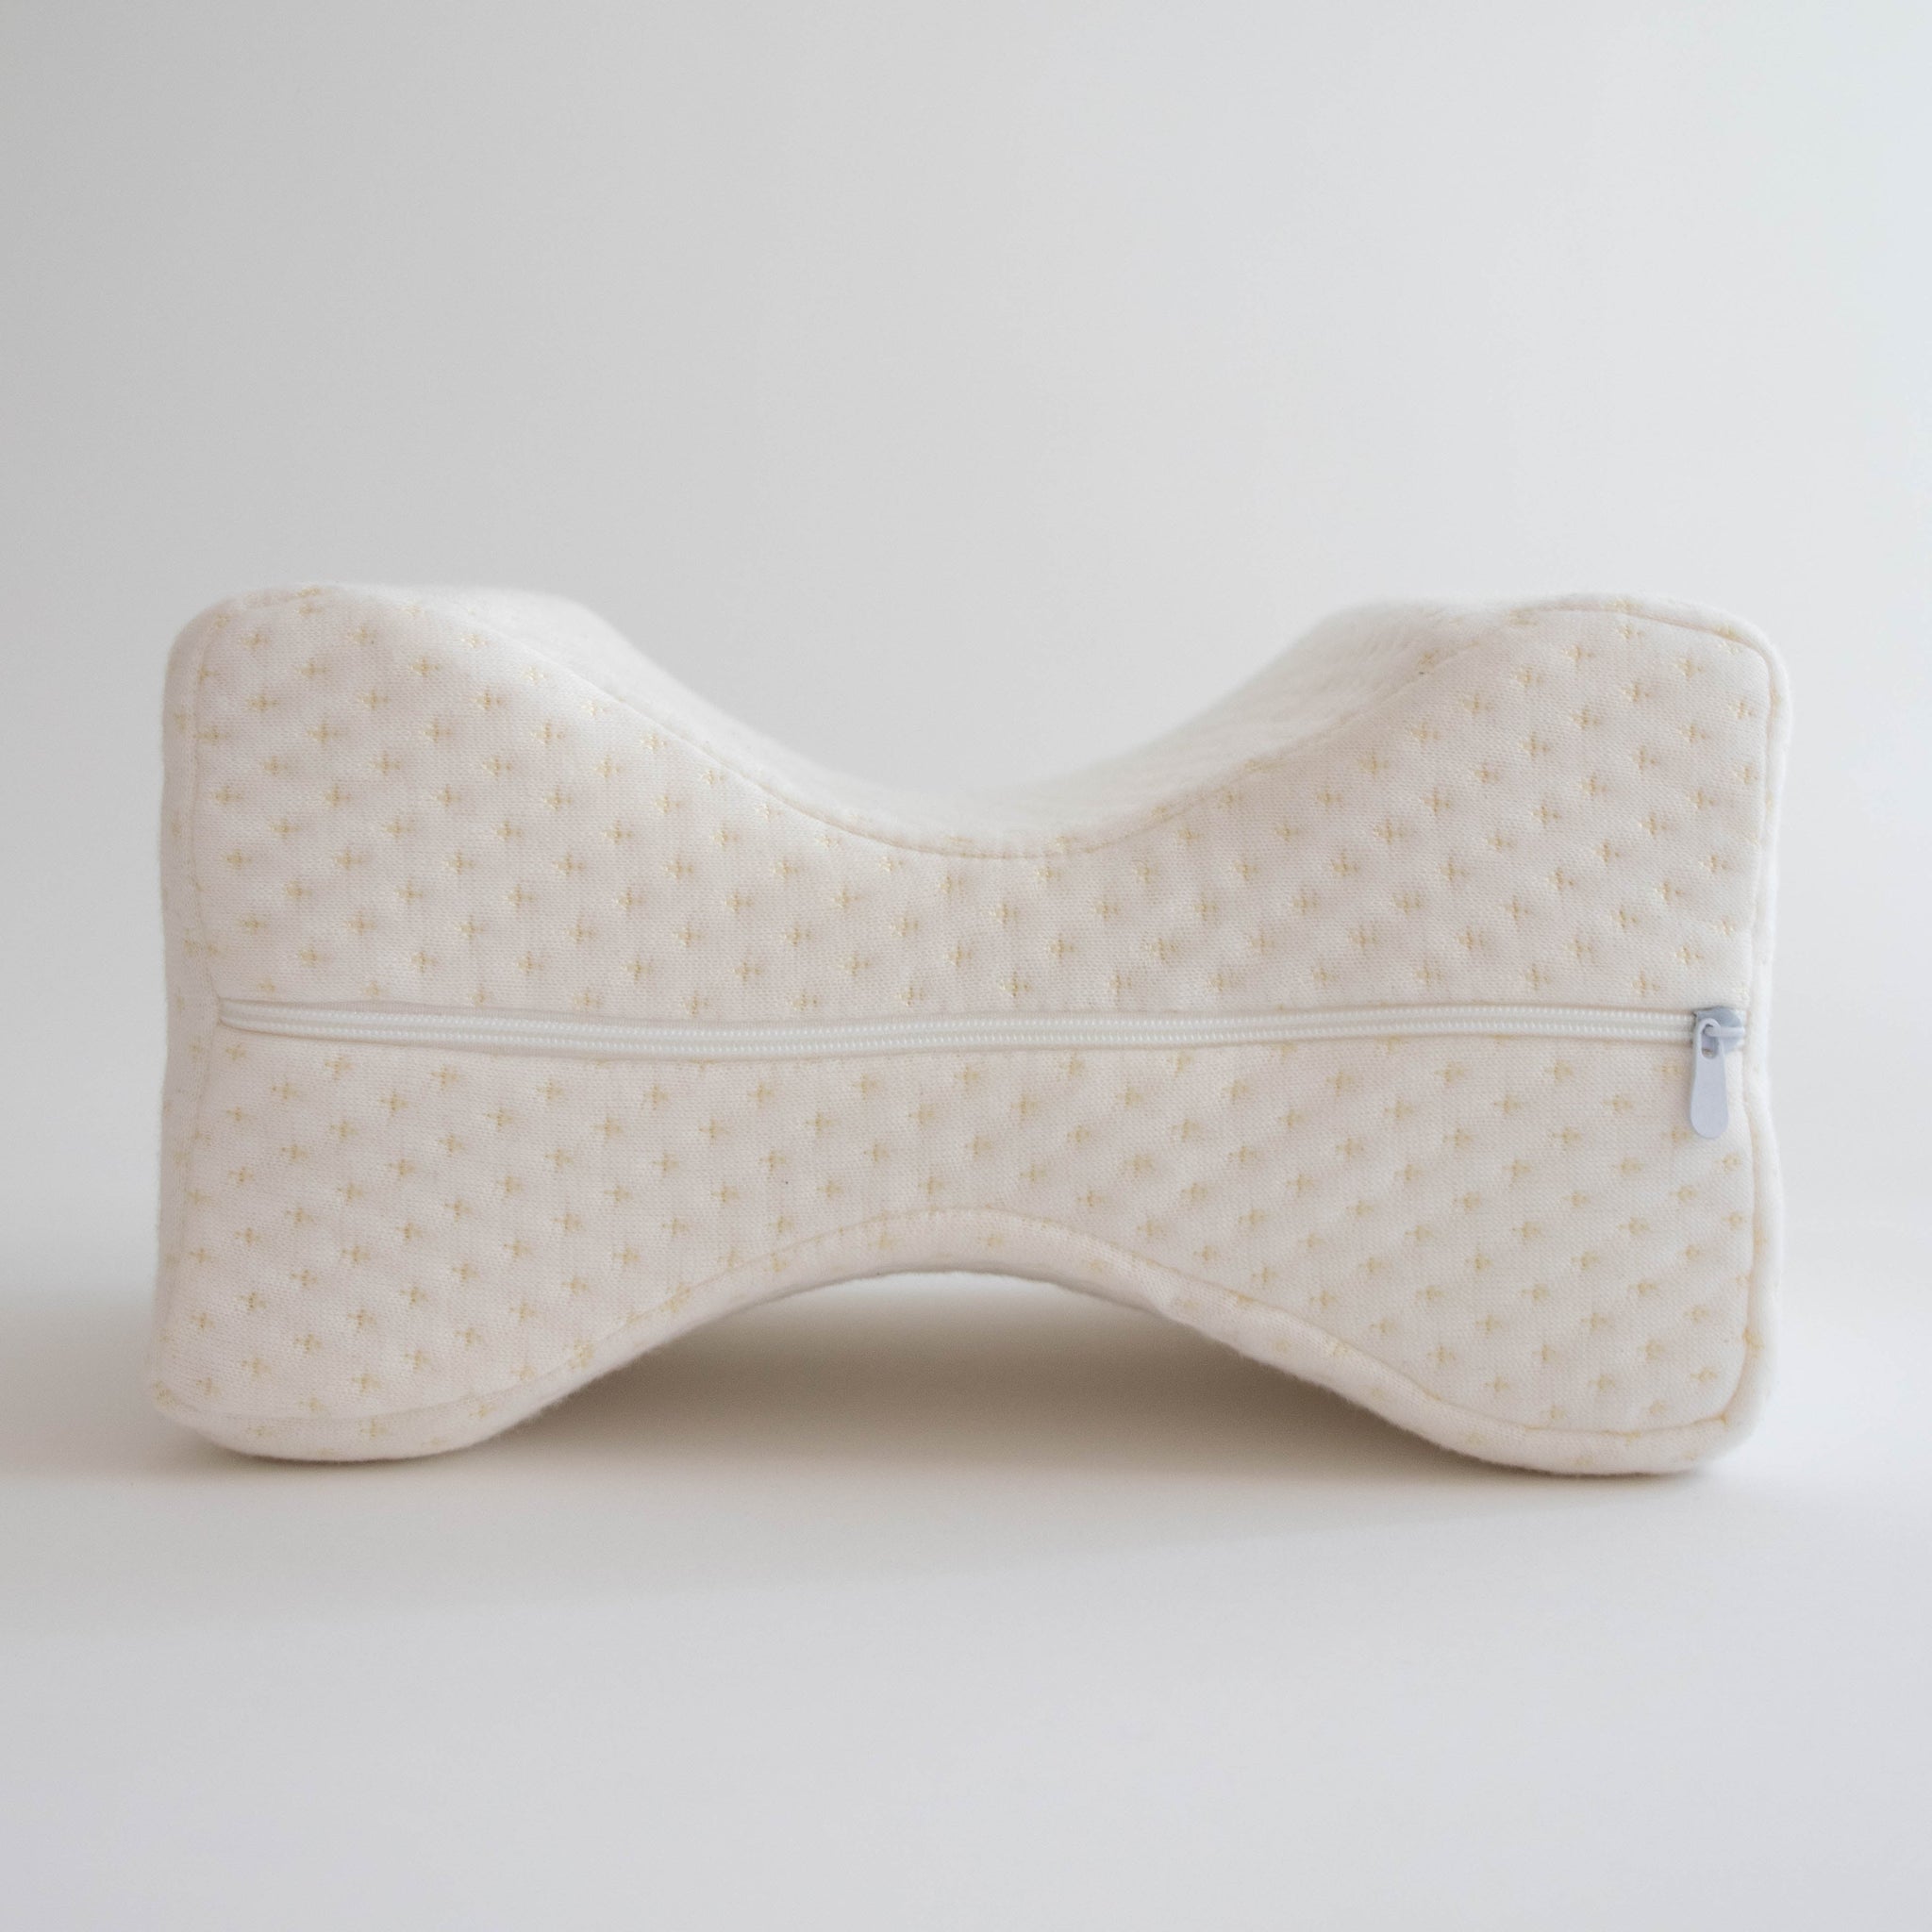 ProSleepy™ Orthopedic Knee Pillow: eliminate Knee pain when sleeping -  ProSleepy